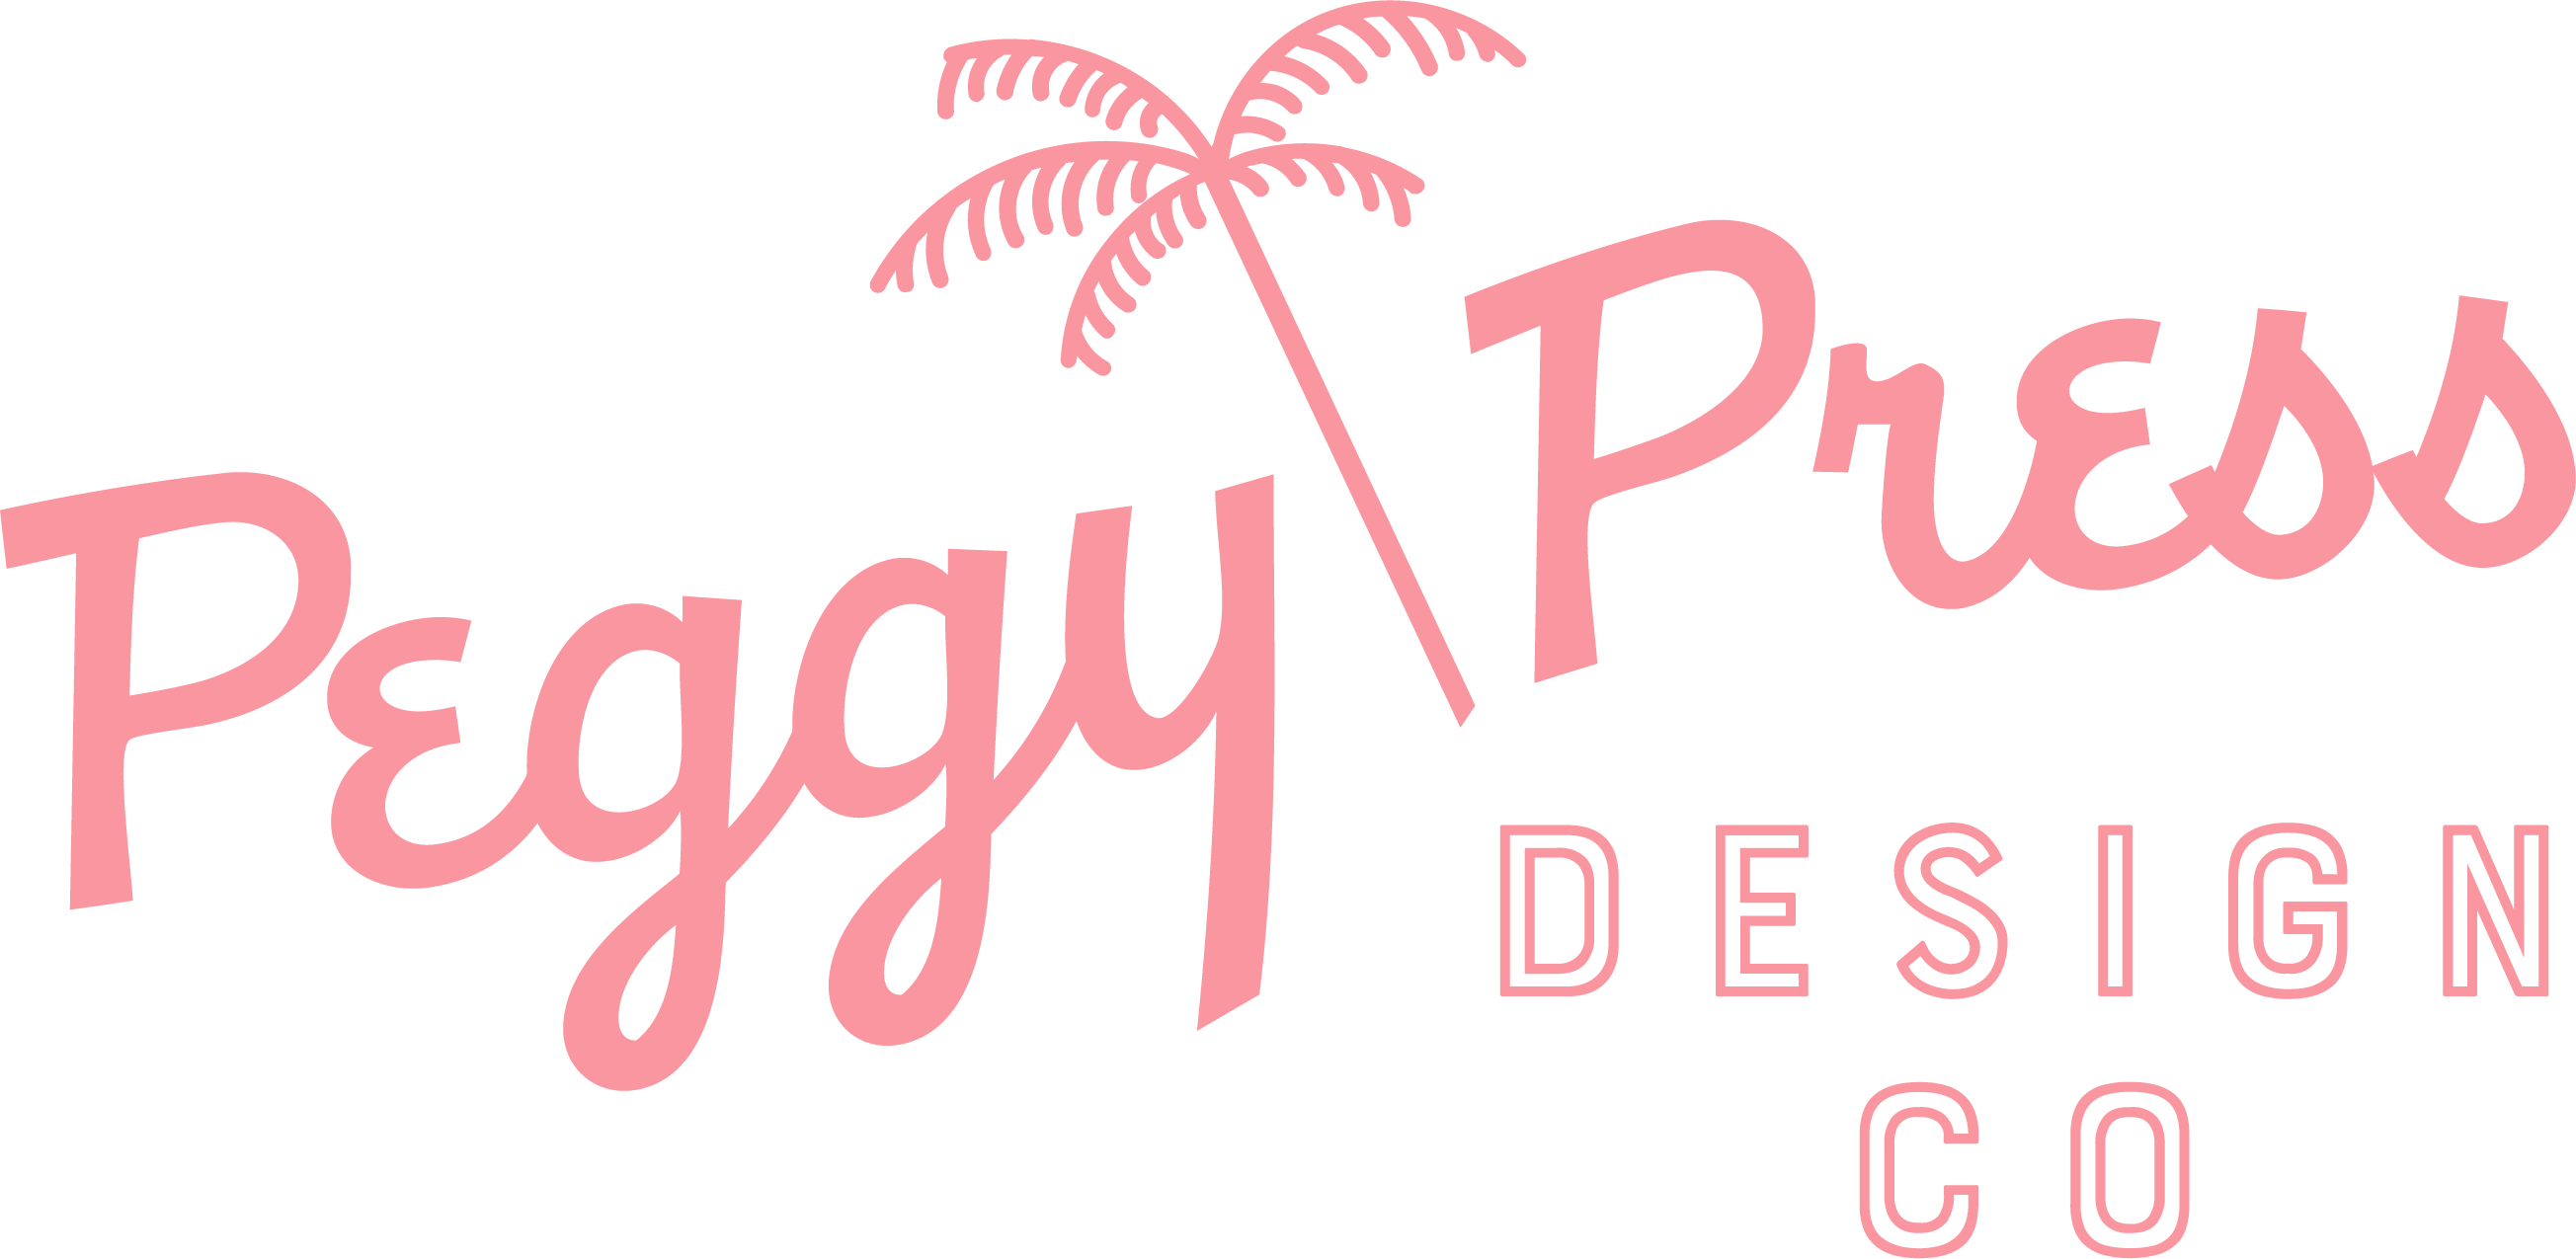 Peggy Press Co